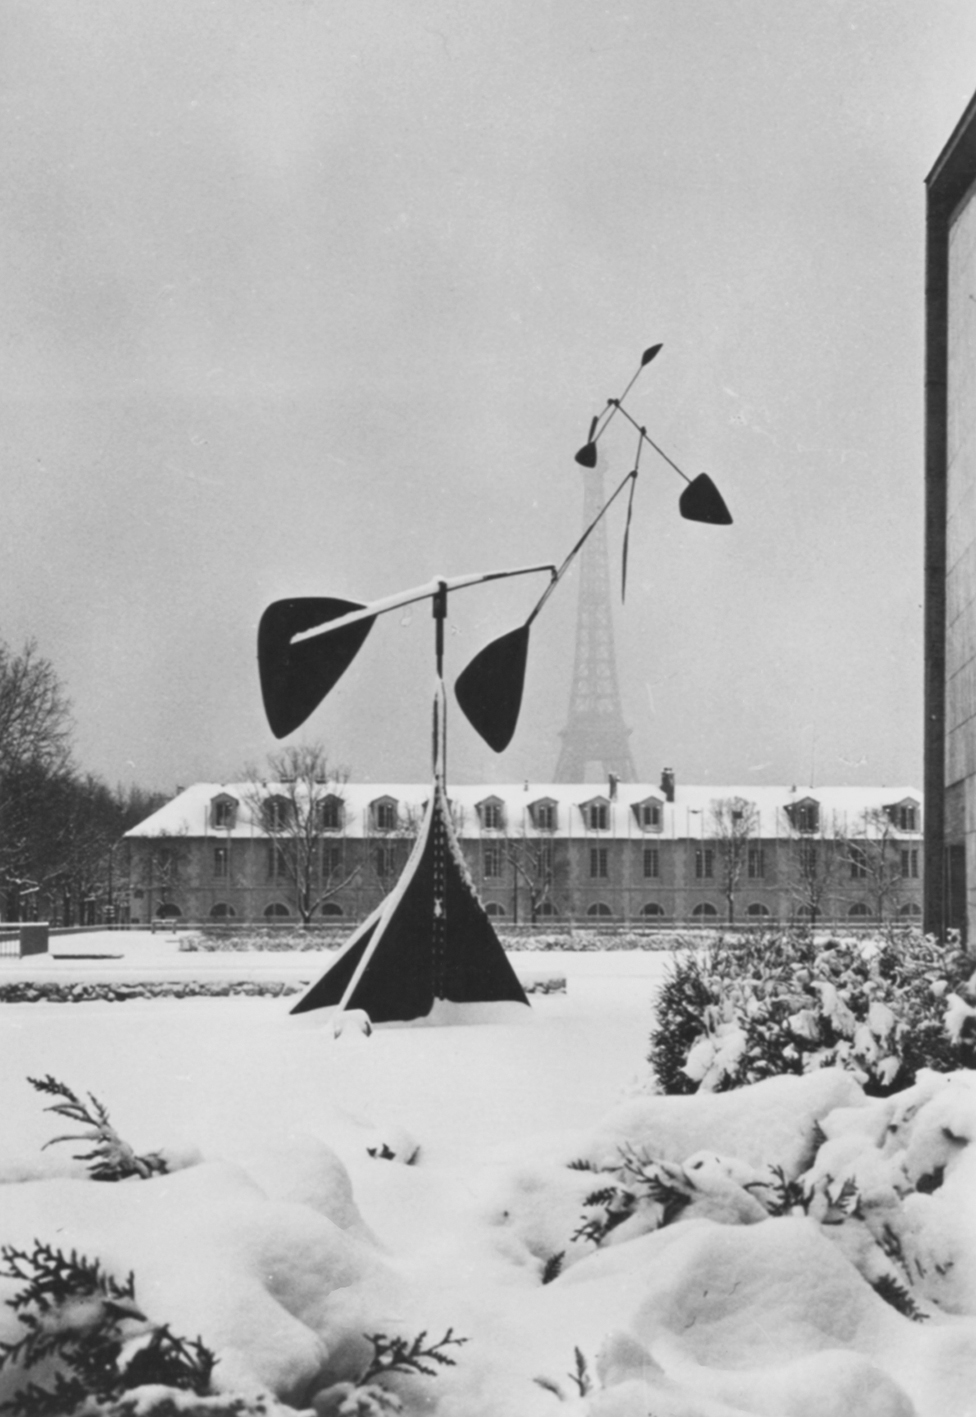 Base of the mobile La Spirale by Alexander Calder, U.N.E.S.C.O., Paris, 1958.